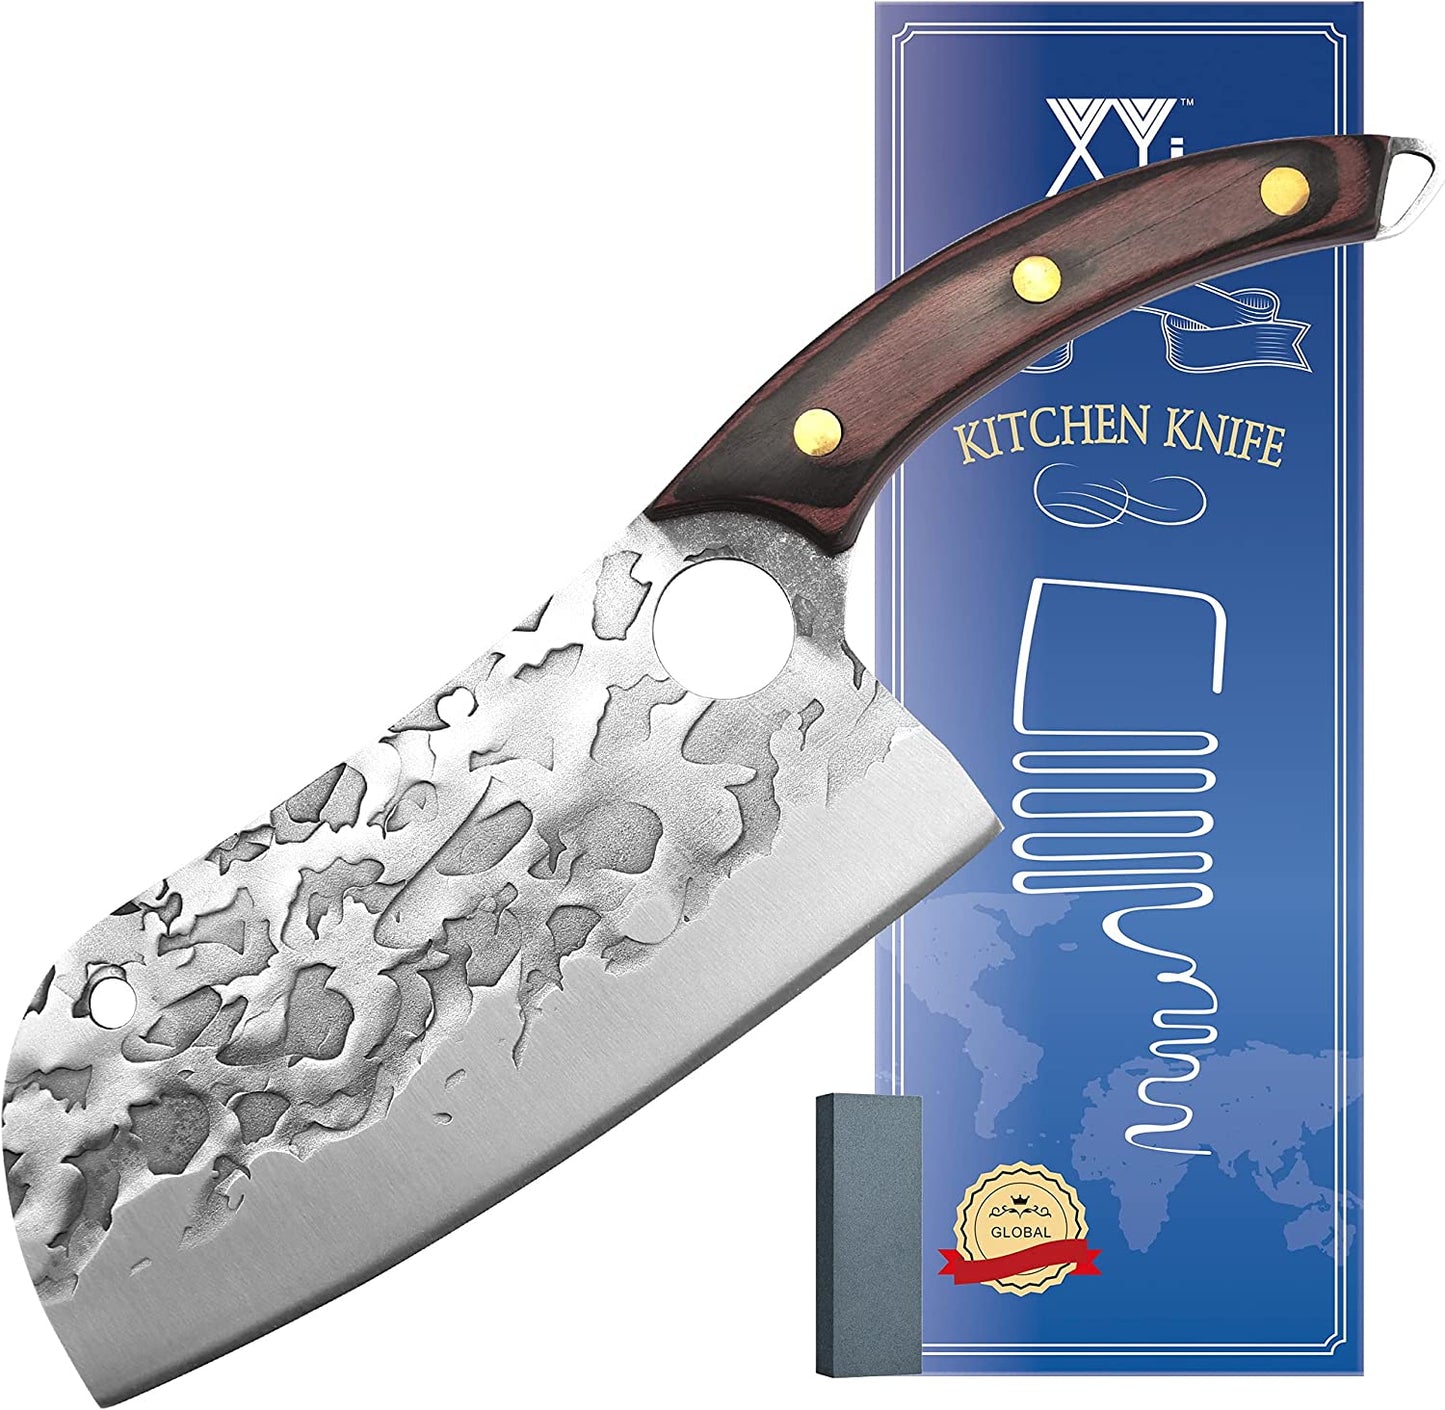 7.5” Full Tang Chopping Knife Ultra Sharp High Carbon Steel Meat Slicing Vegetable Chopper Fixed Non-Stick Hammer Blade Finger Hole Effort Saving Design